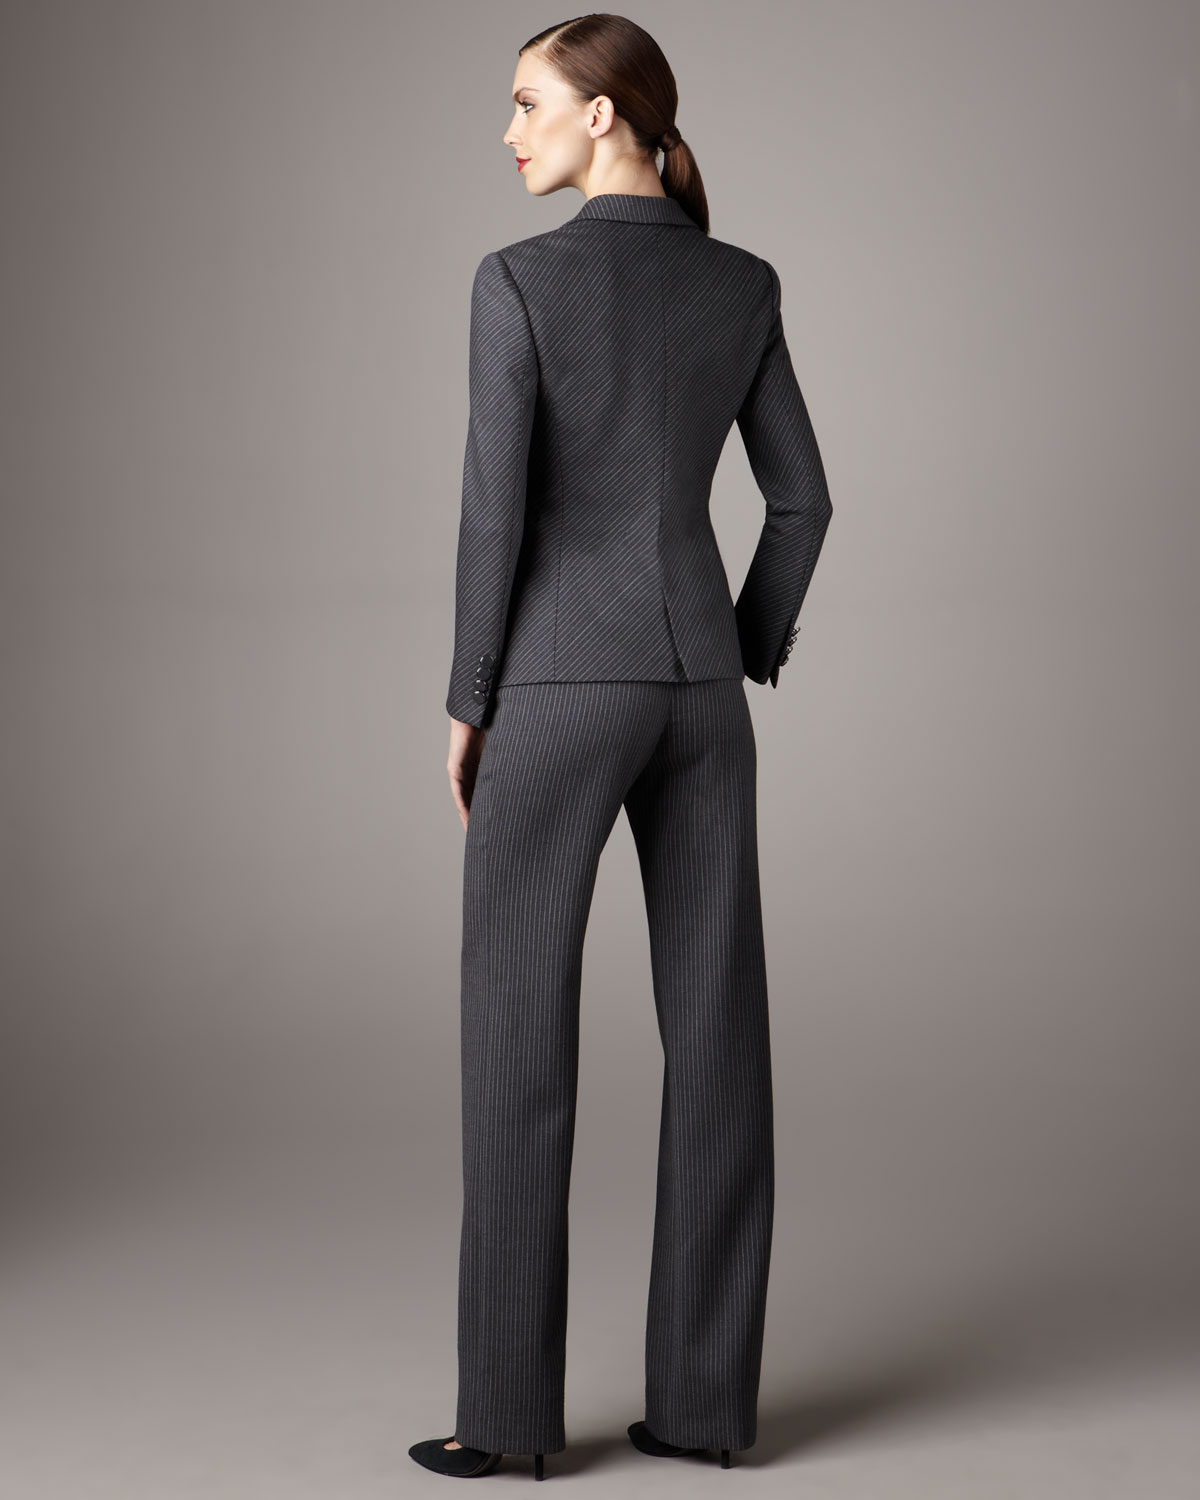 Armani Female Suits on Sale, 60% OFF 